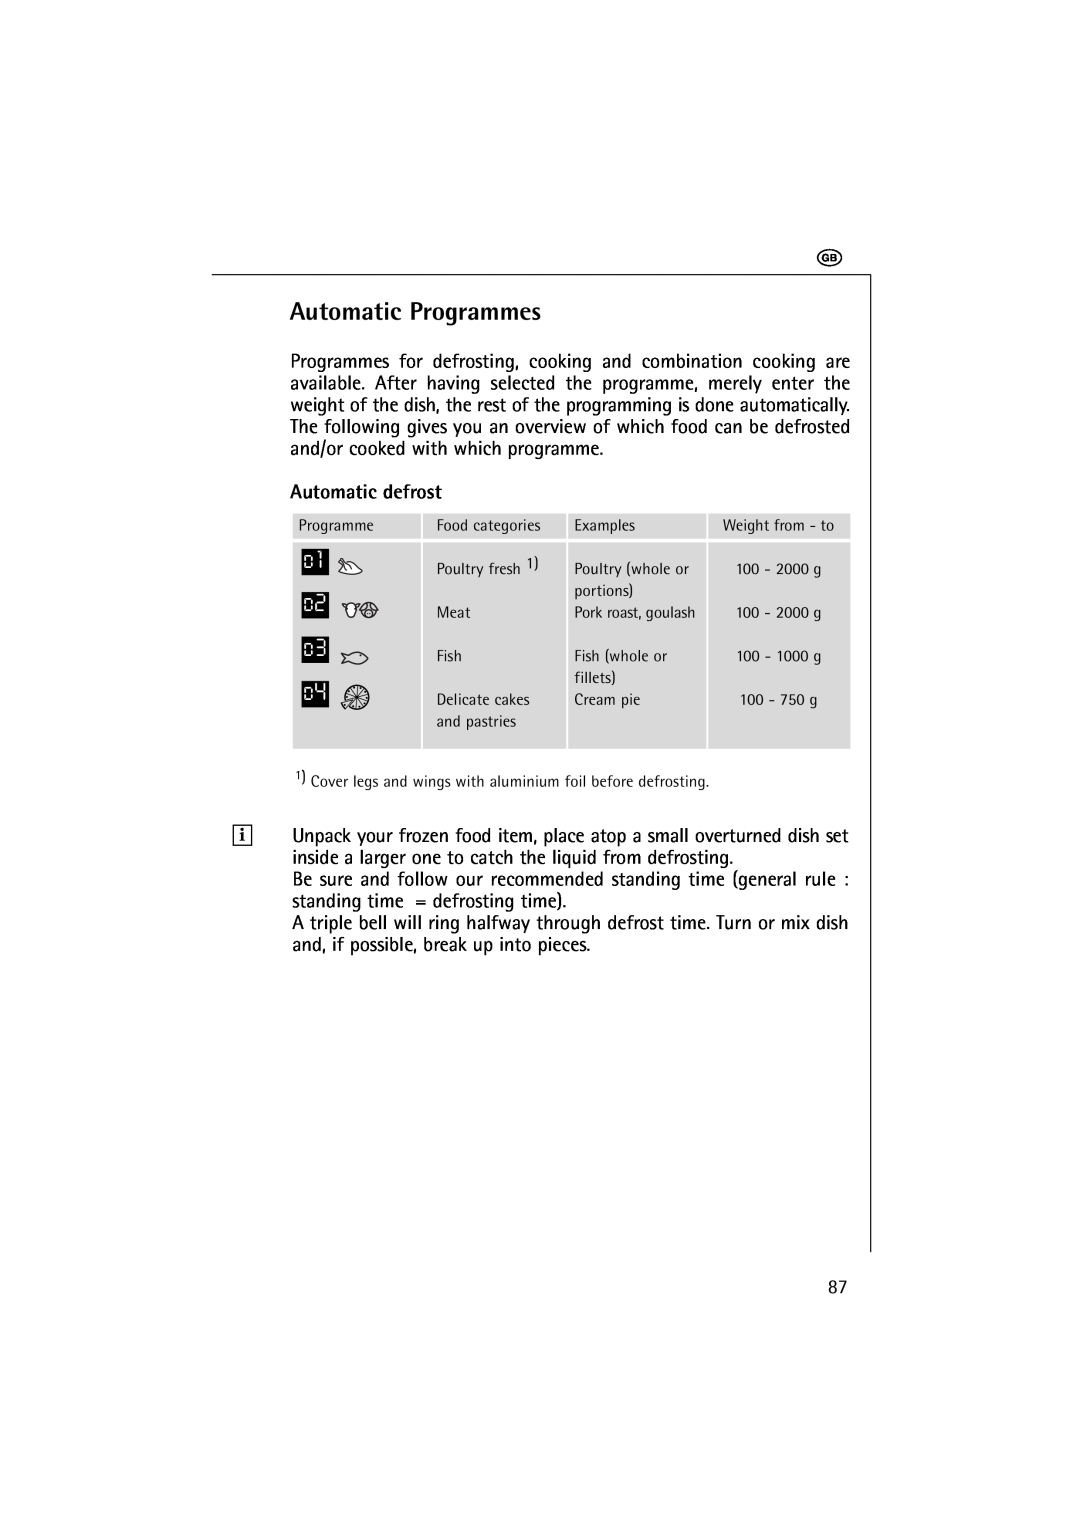 AEG 1231 E manual Automatic Programmes, Automatic defrost 